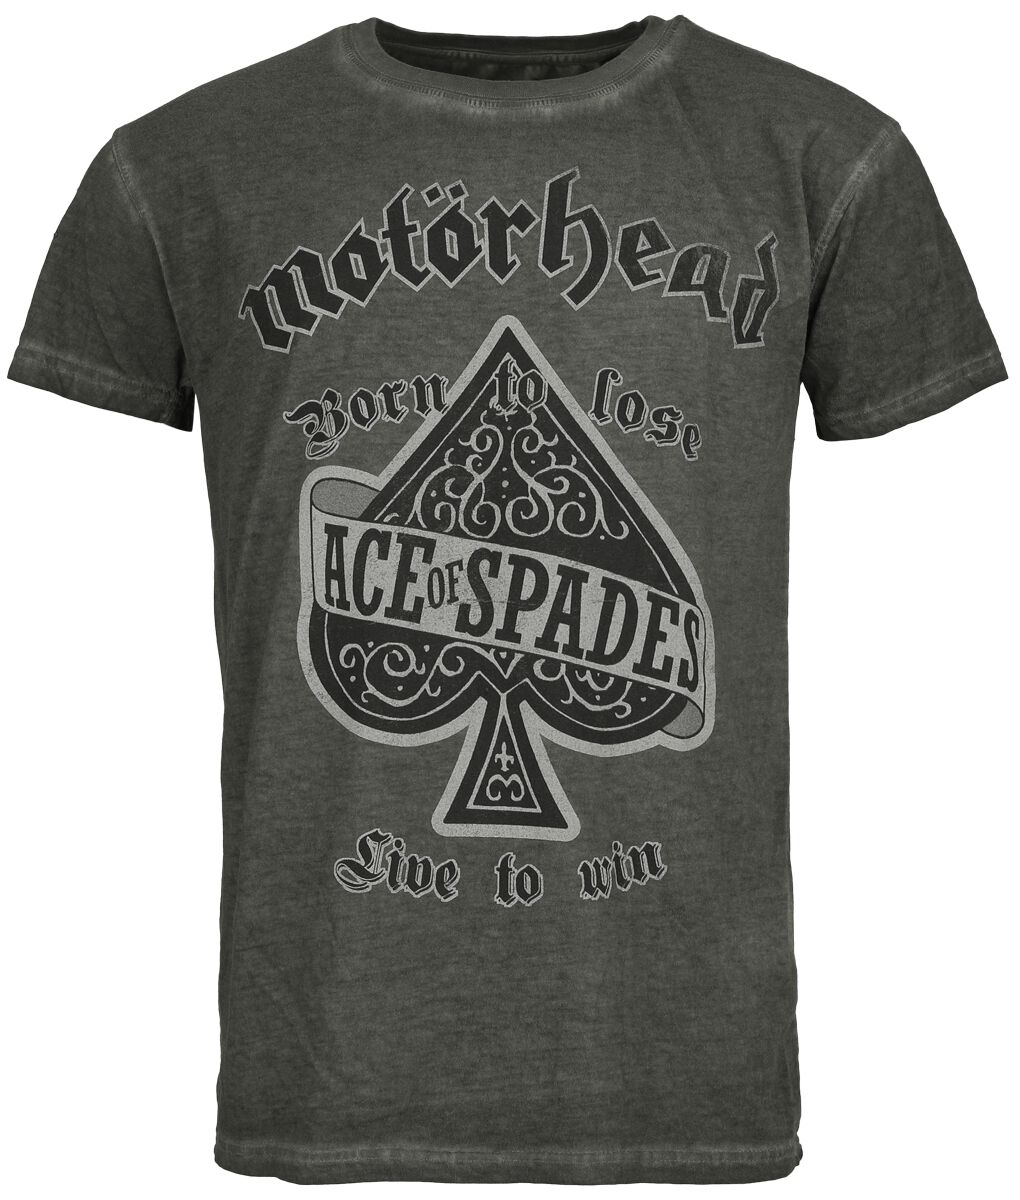 Motörhead Ace Of Spades T-Shirt anthrazit in 4XL